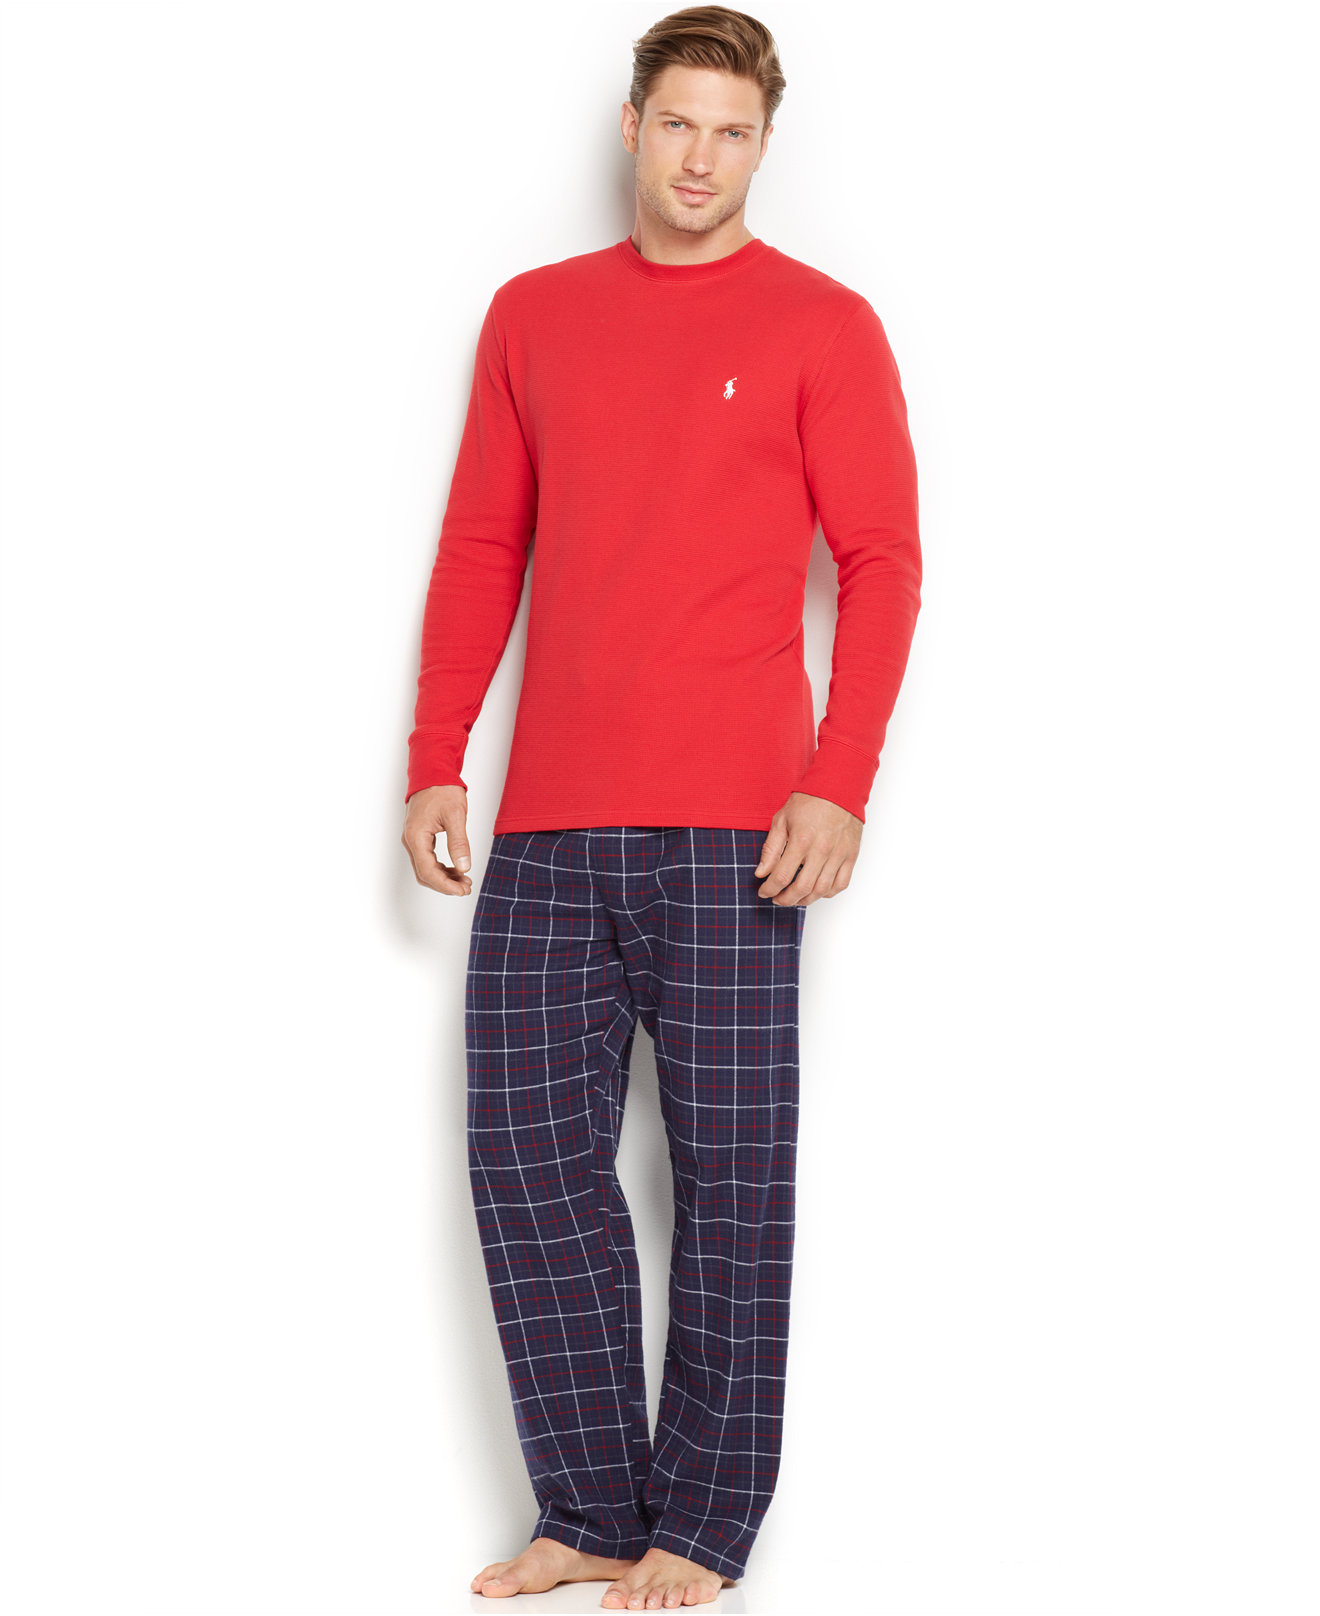 Mens Pajamas: Loungewear & Sleepwear - Macy's - Macy's